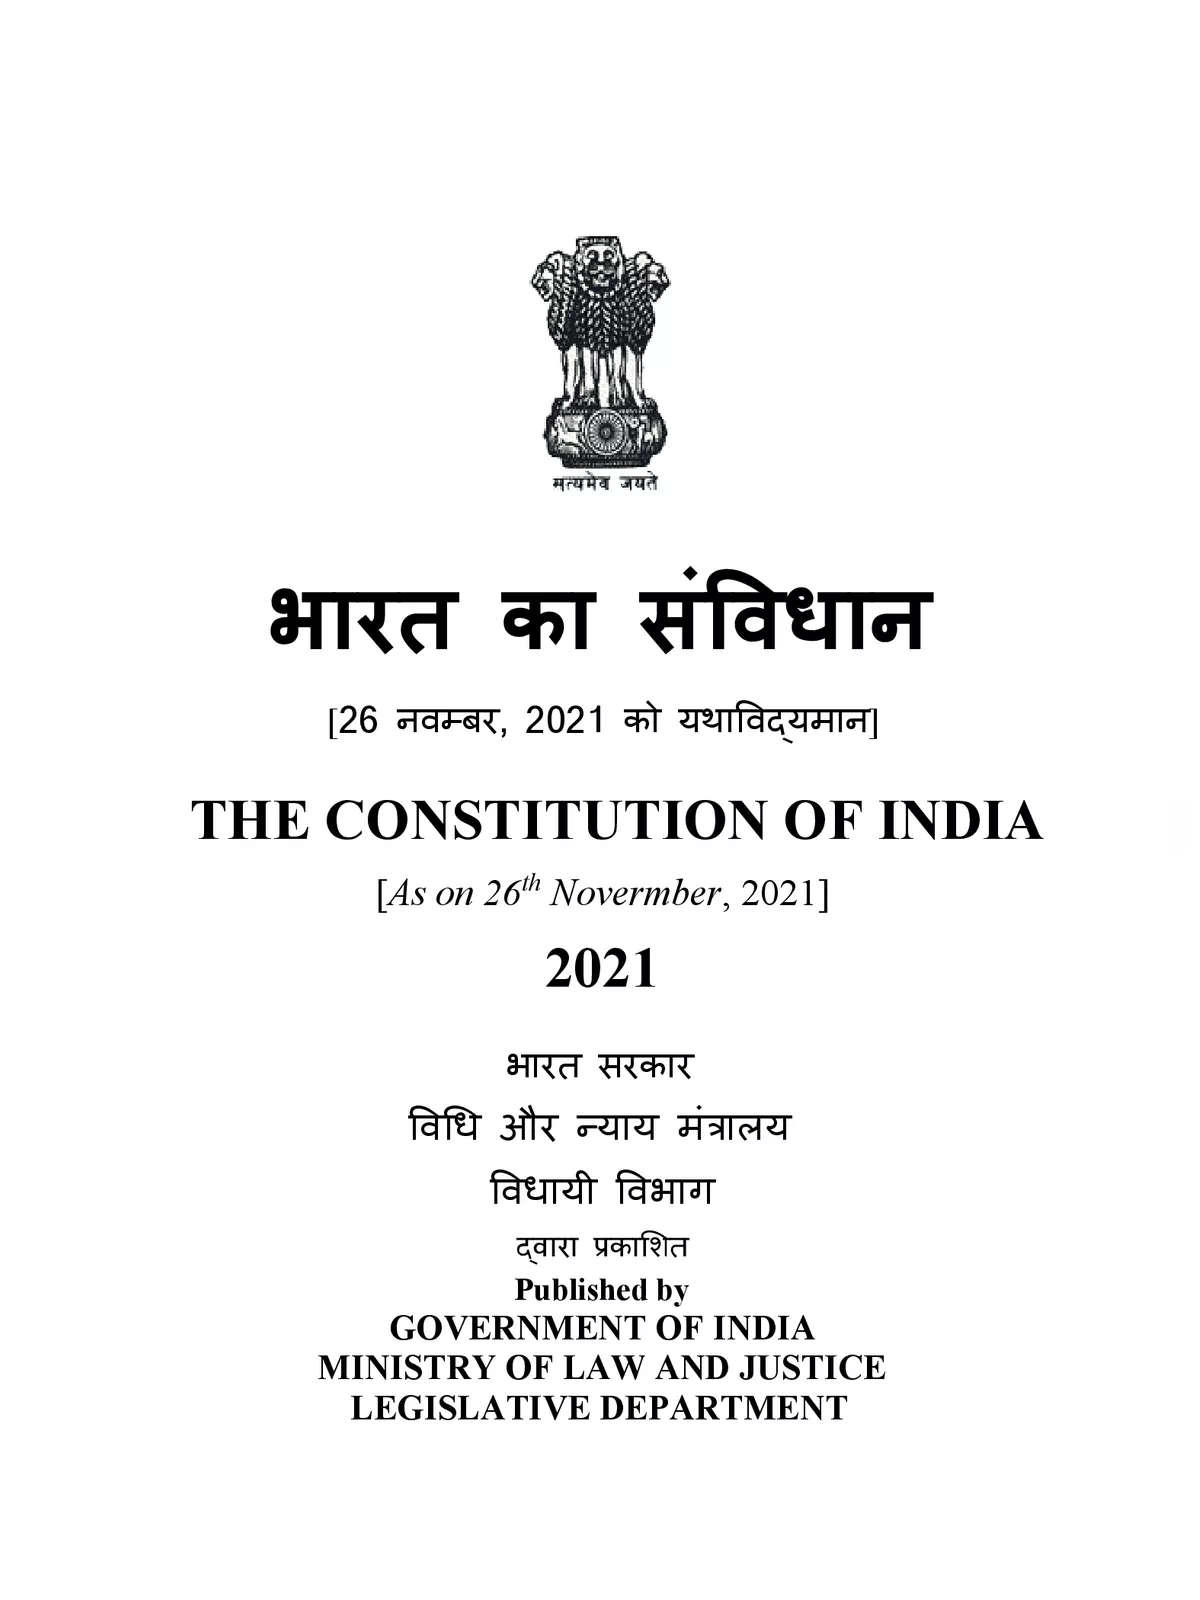 भारतीय संविधान (The Constitution of India)